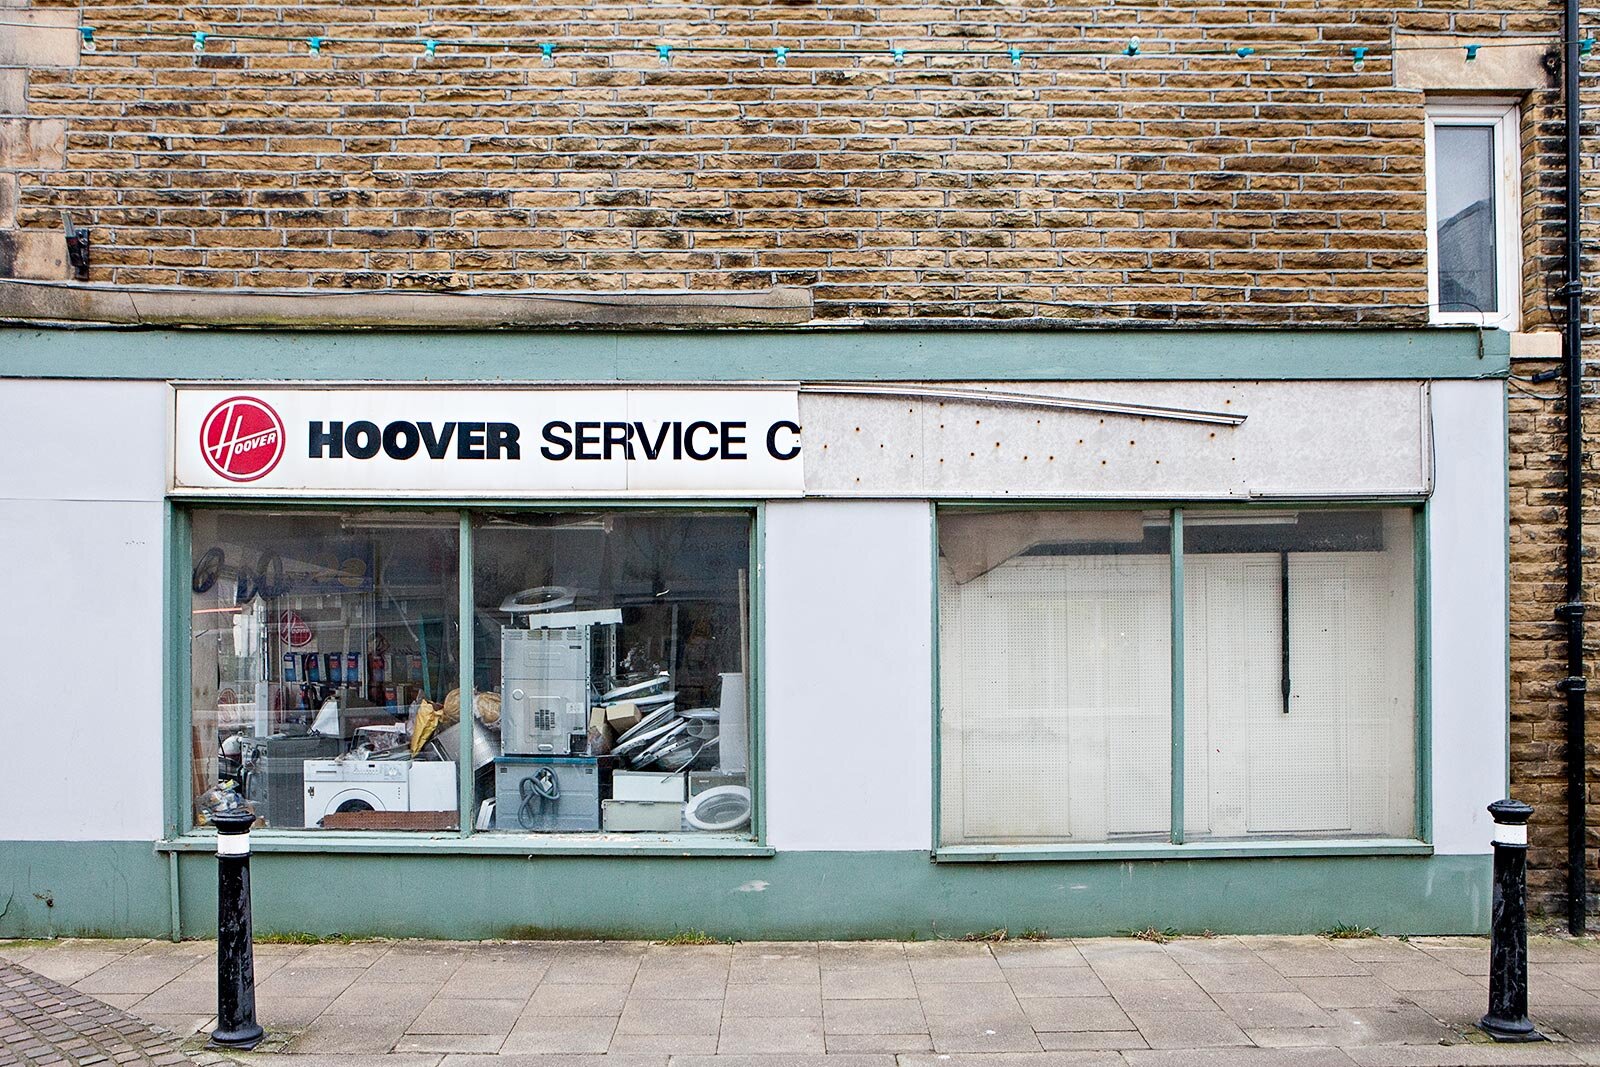 Hoover Service Centre, Yorkshire Street West, Morecambe, 2018 (33/50)